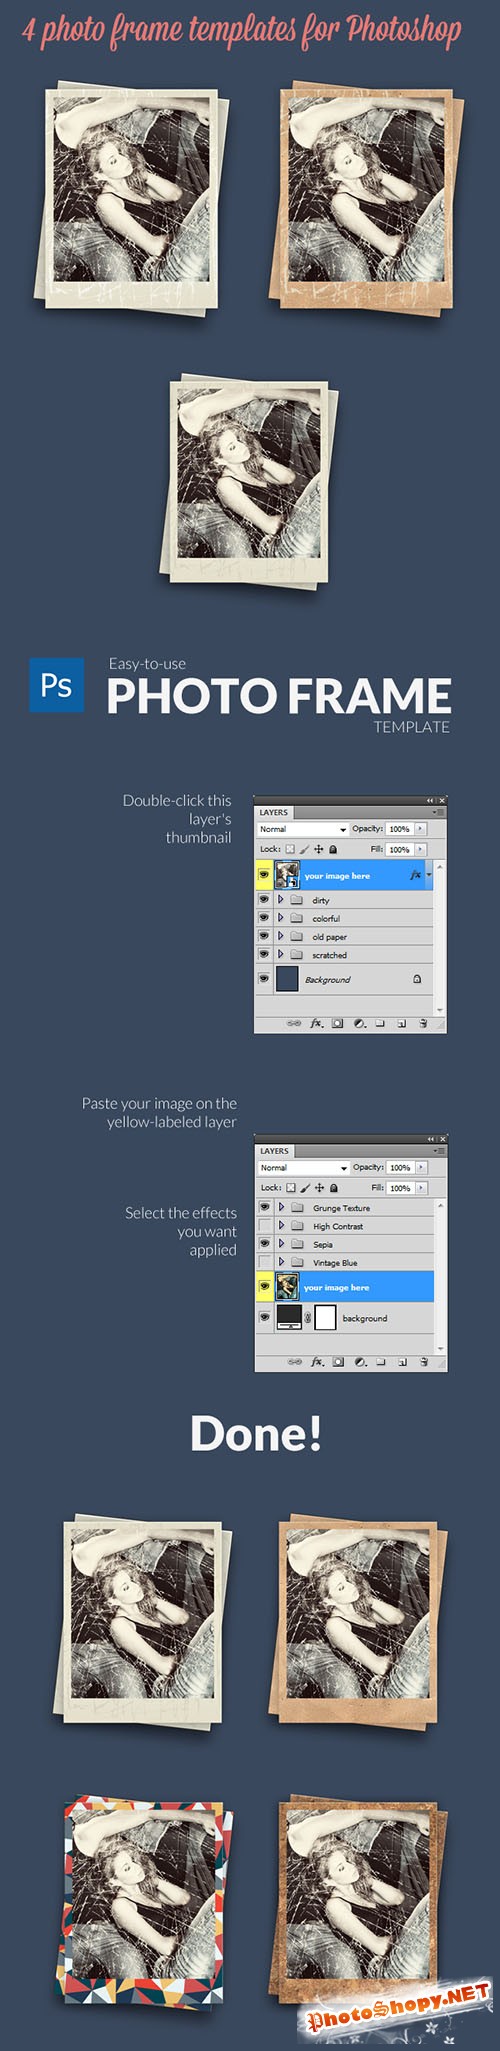 Designtnt - Photo Frames PS Generator